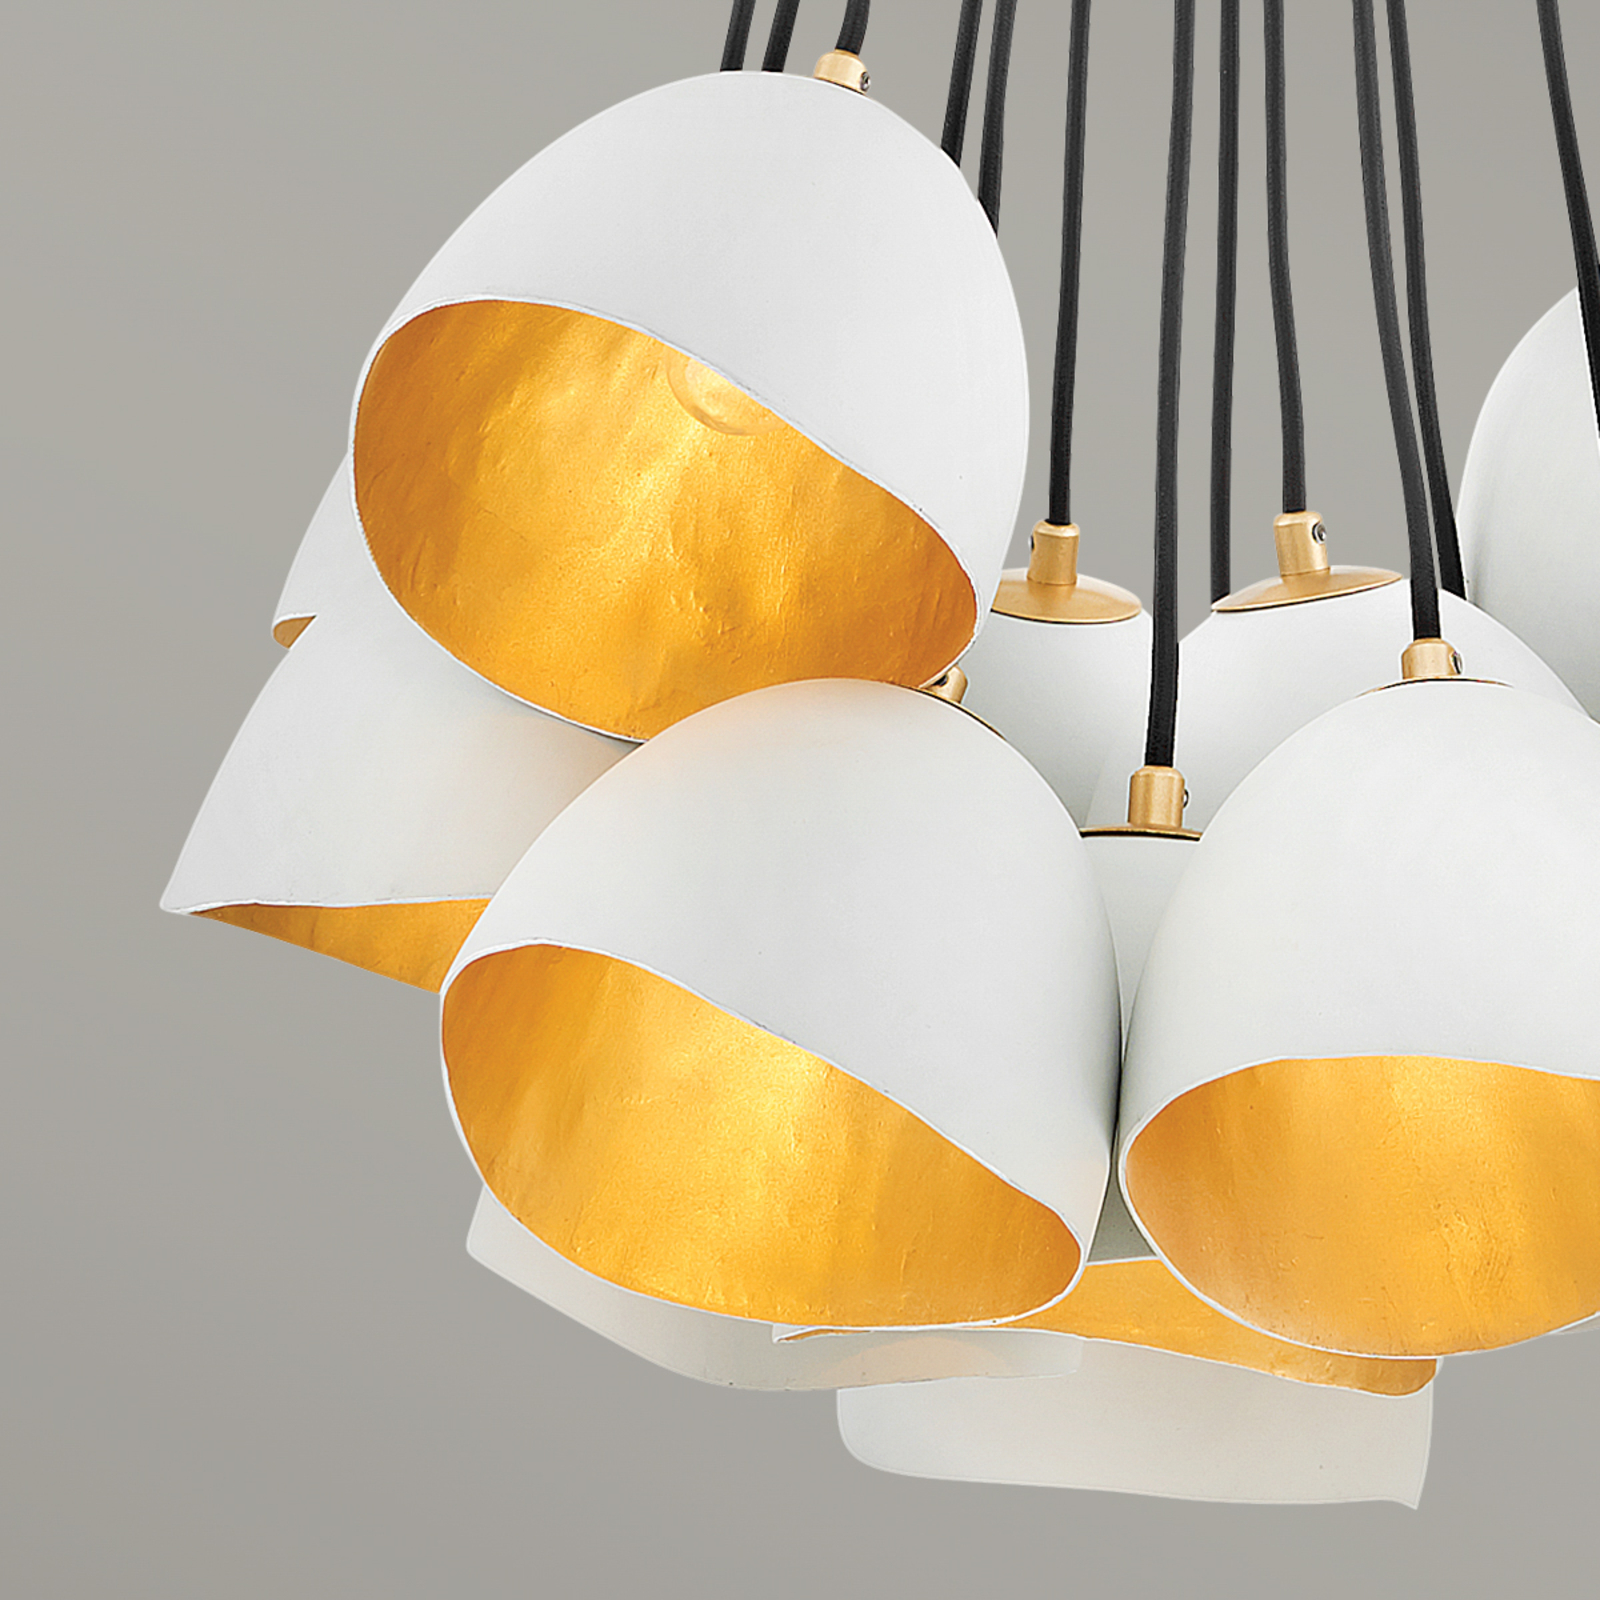 Hanglamp Nula, gebundeld, wit/goud, 15-lamps